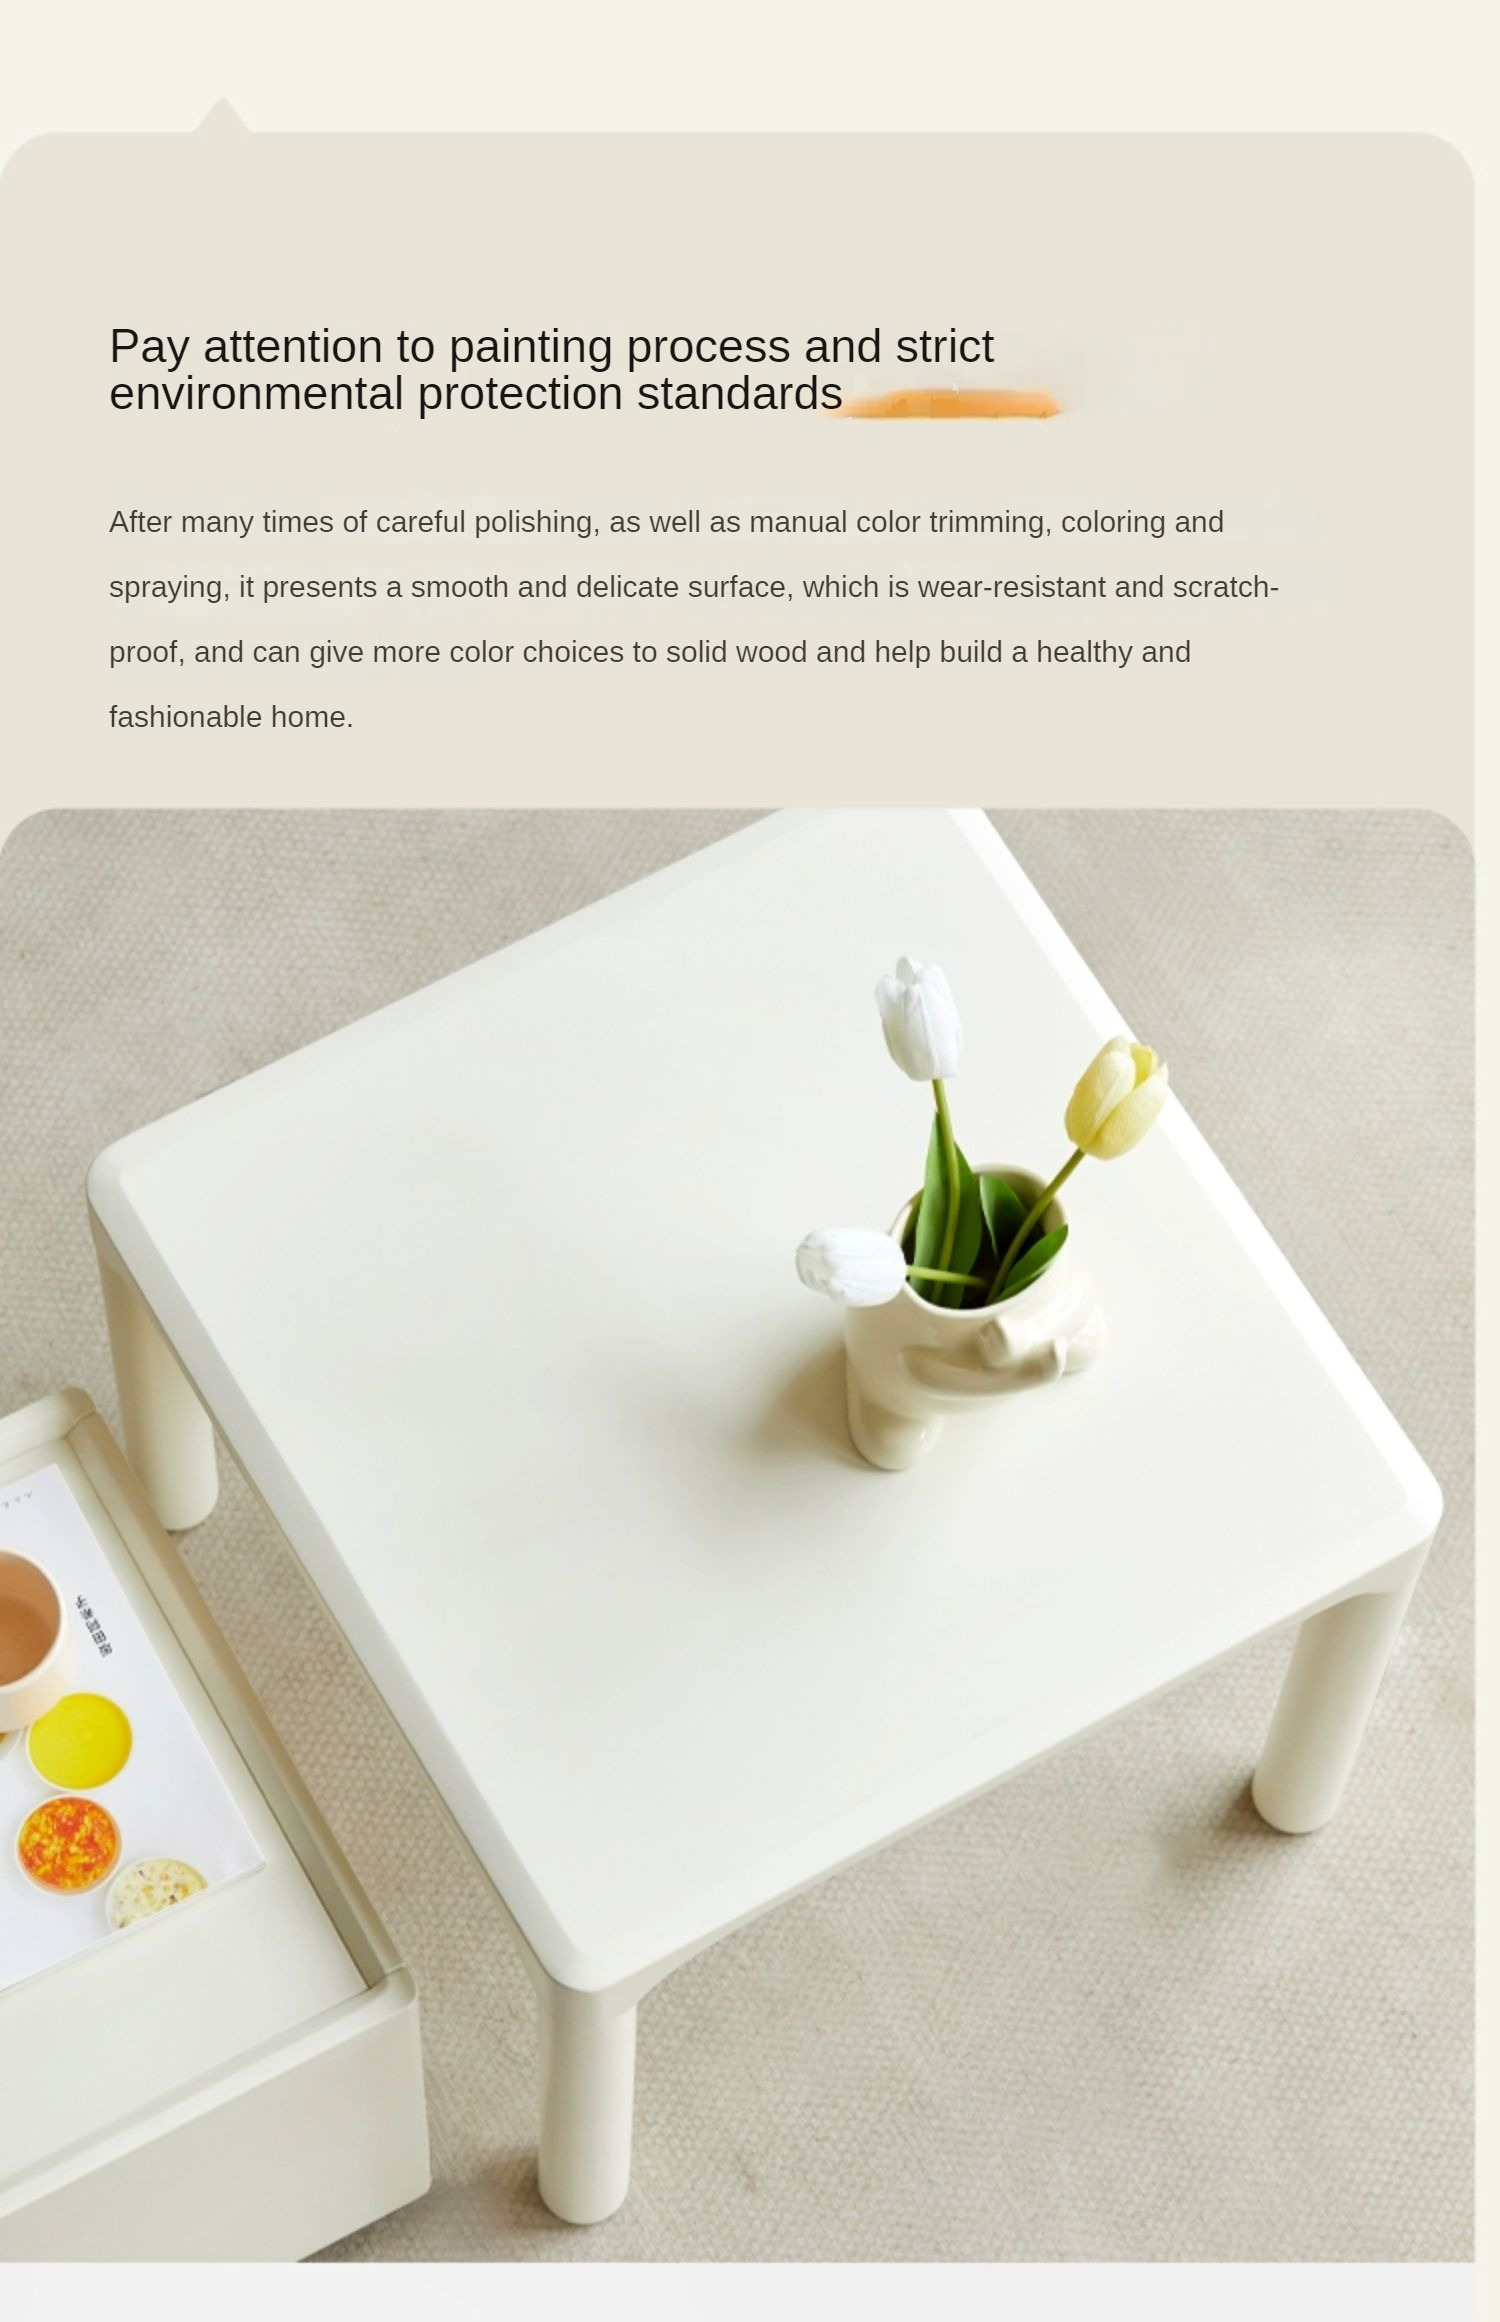 Solid wood coffee table Nordic ,mobile tea table"